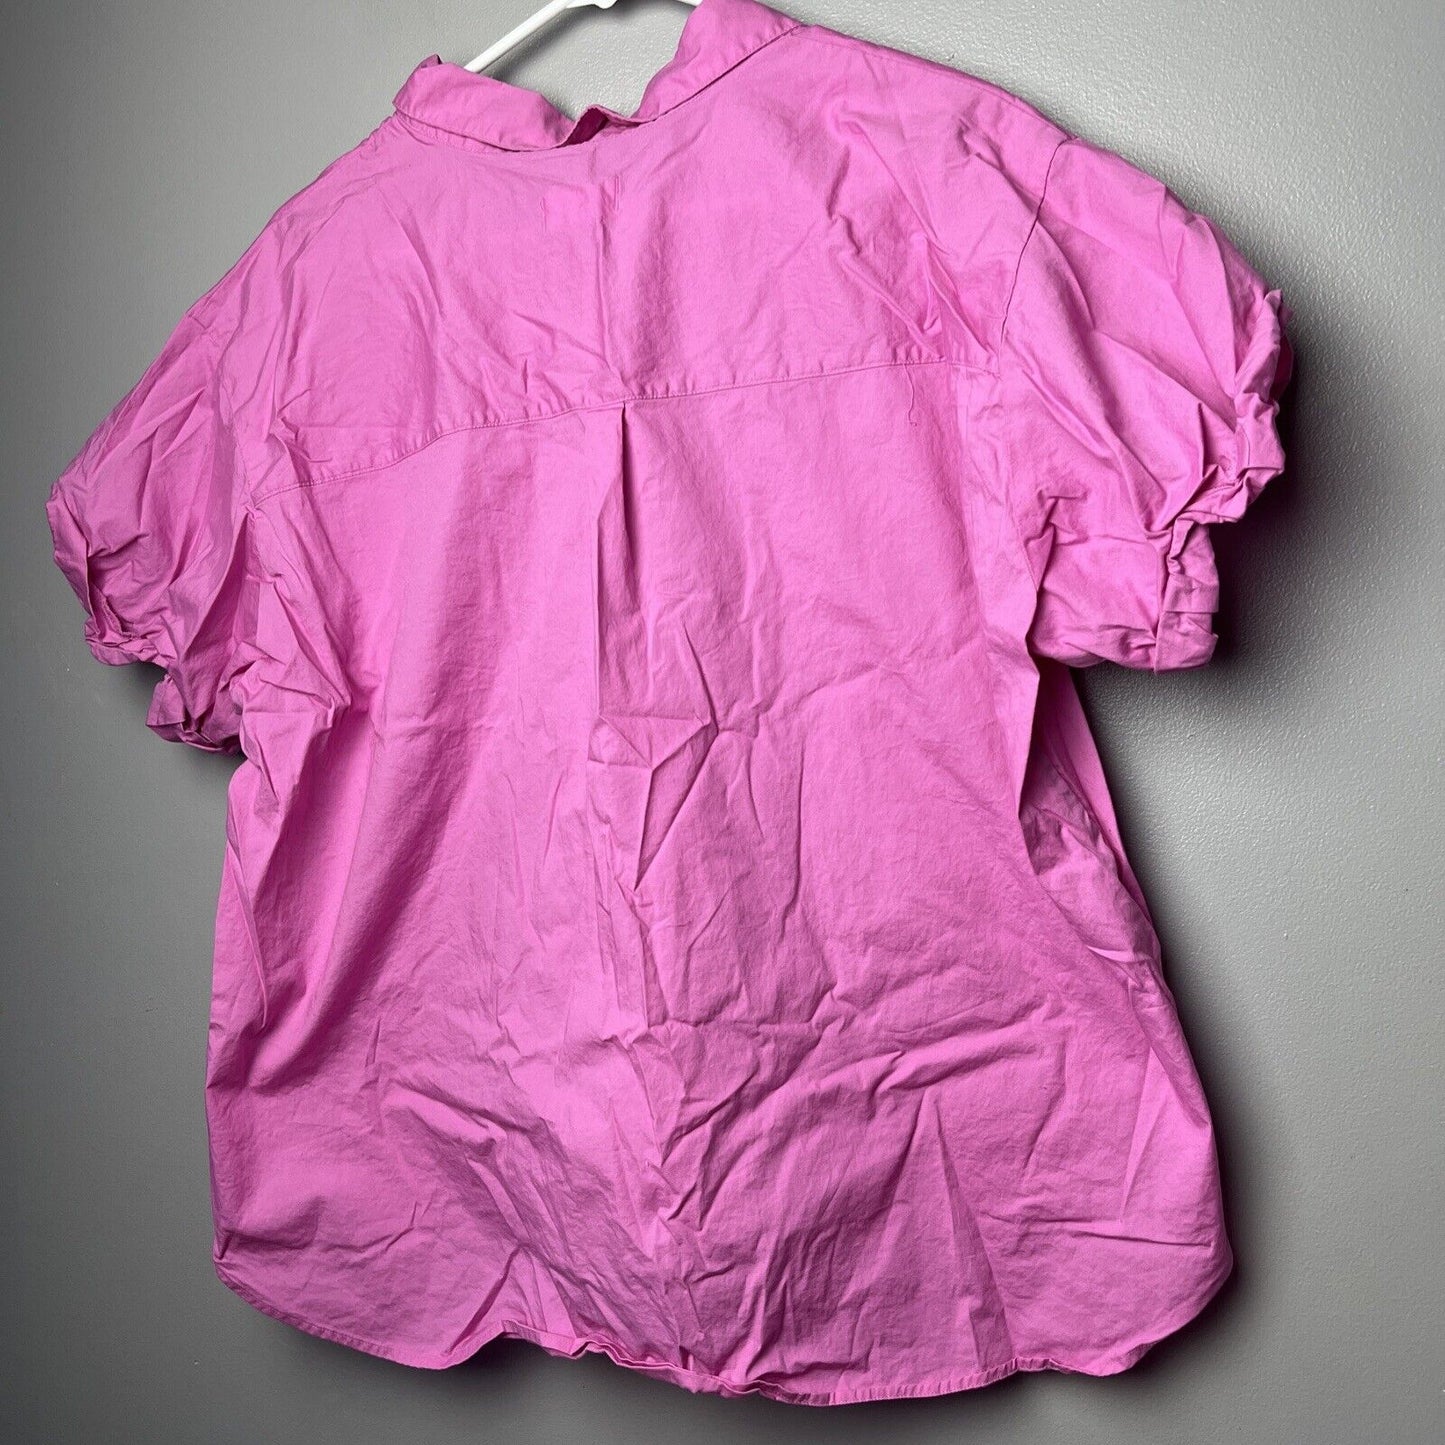 Candace Cameron Bure Women's Top Sz L Reg Stretch Poplin Shirt Pink A480585